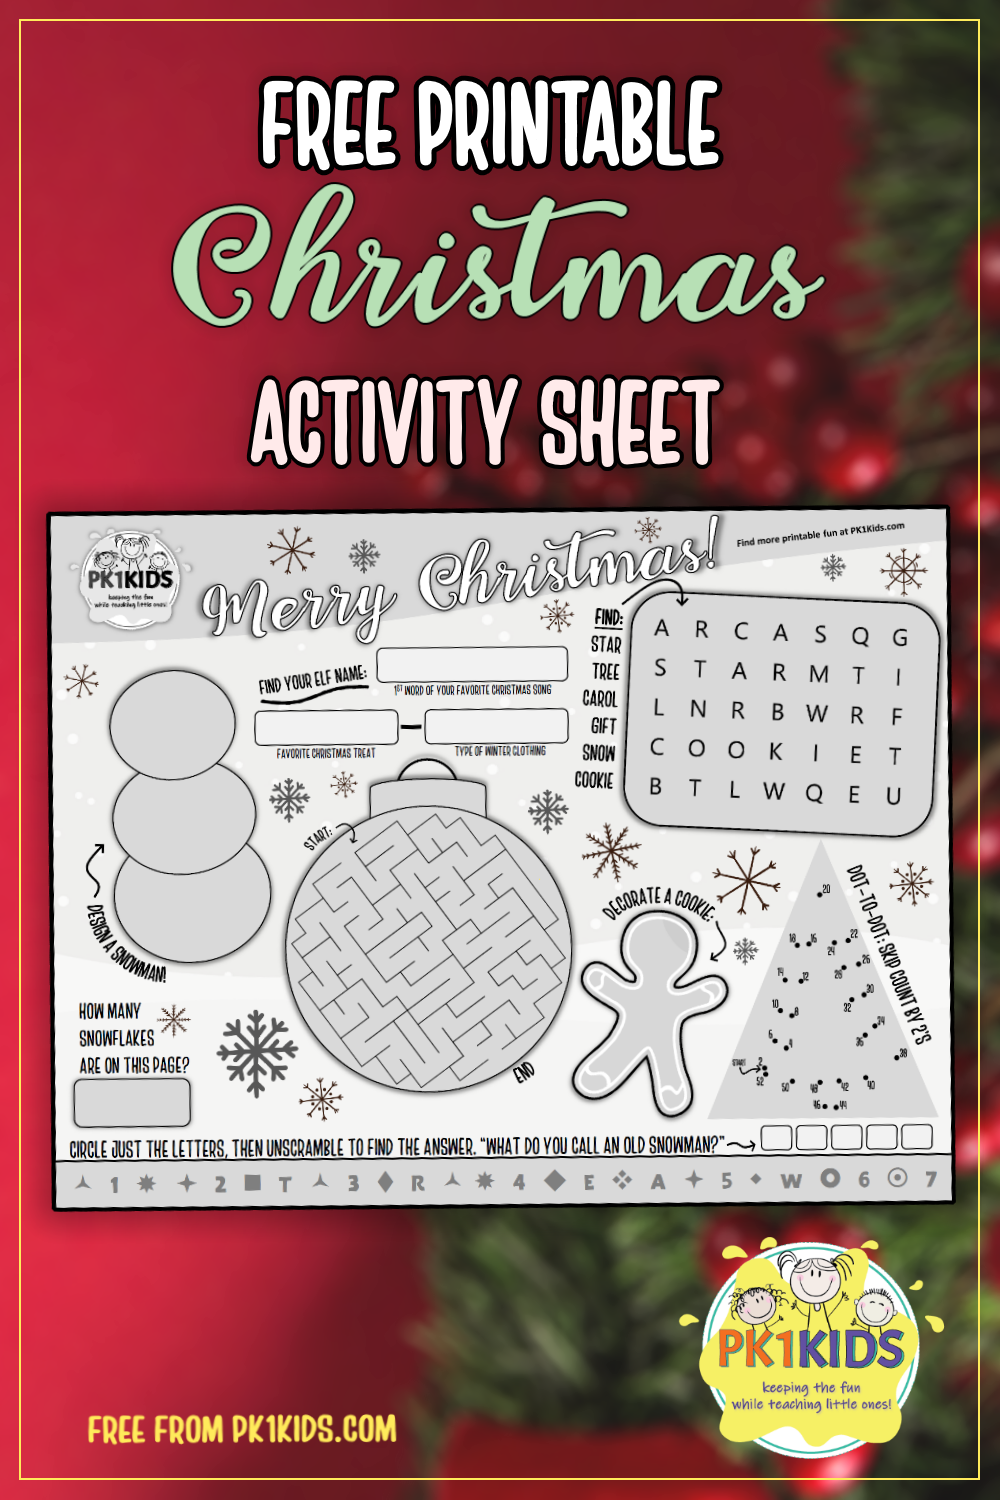 Free printable Christmas themed activity sheet for kids.